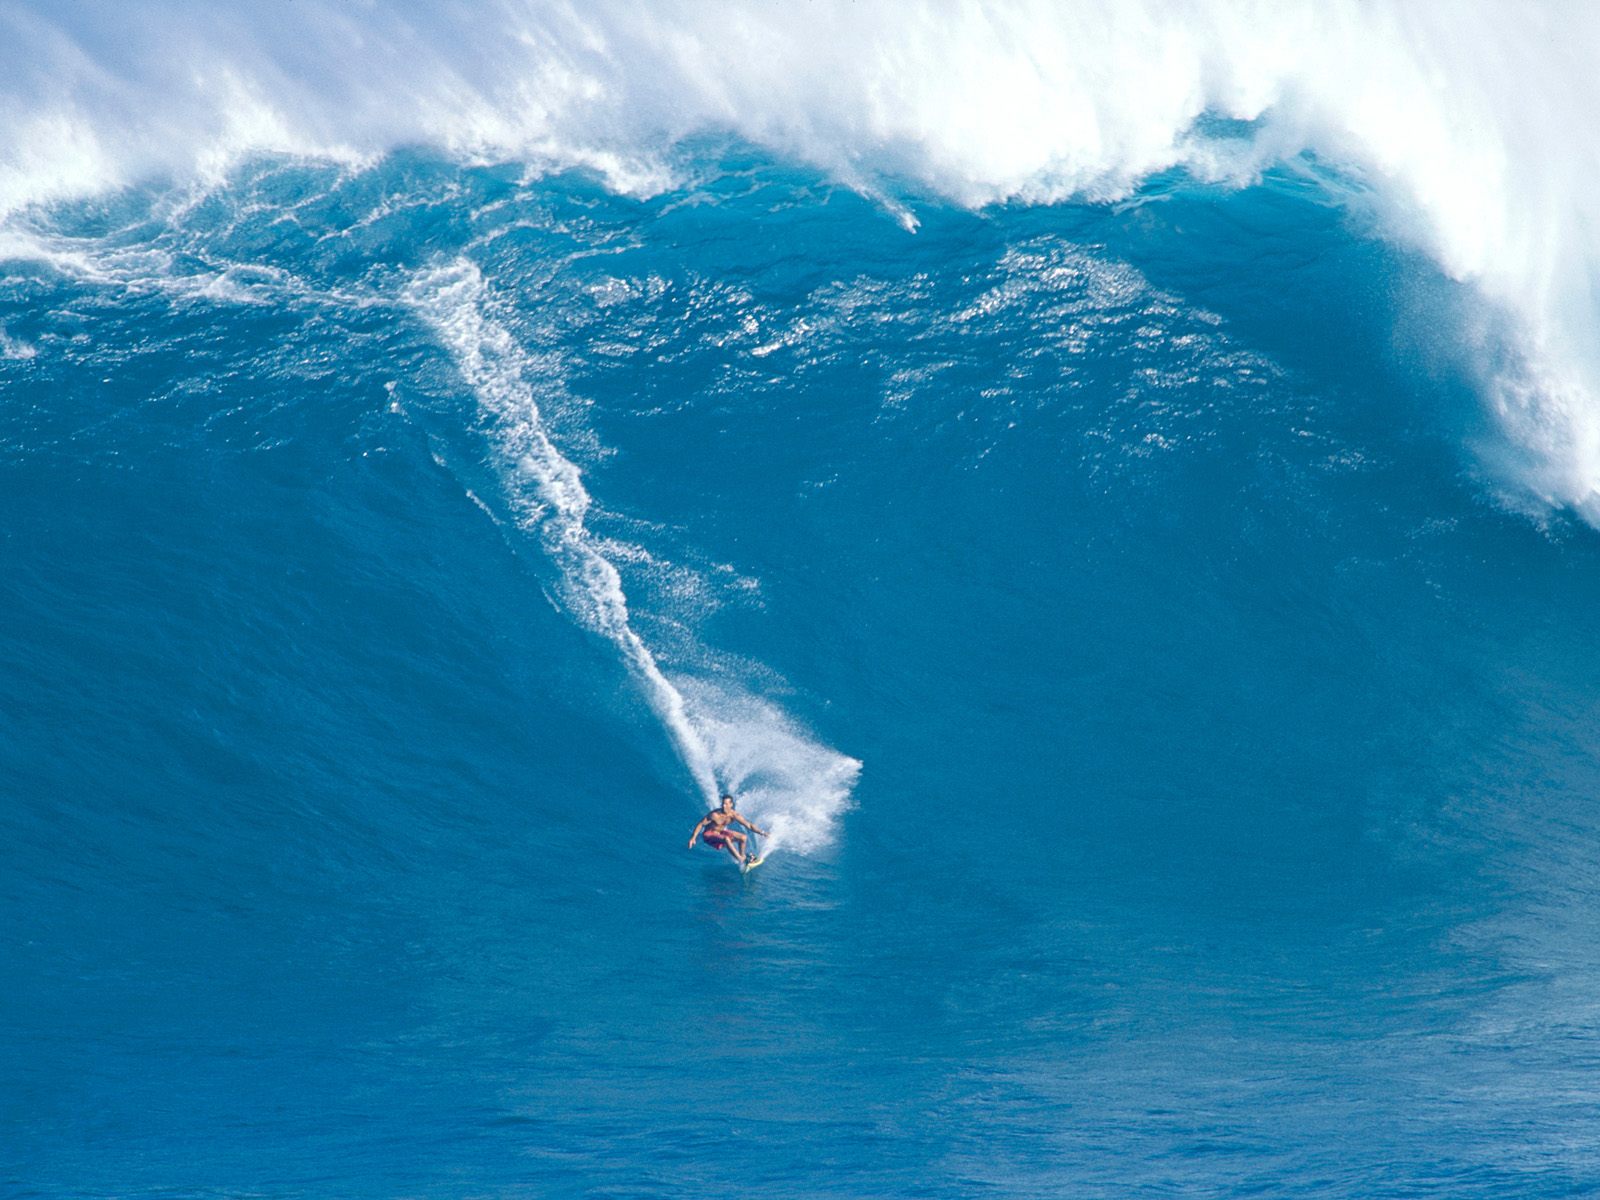 Maui Waves Wallpaper Stock Photos